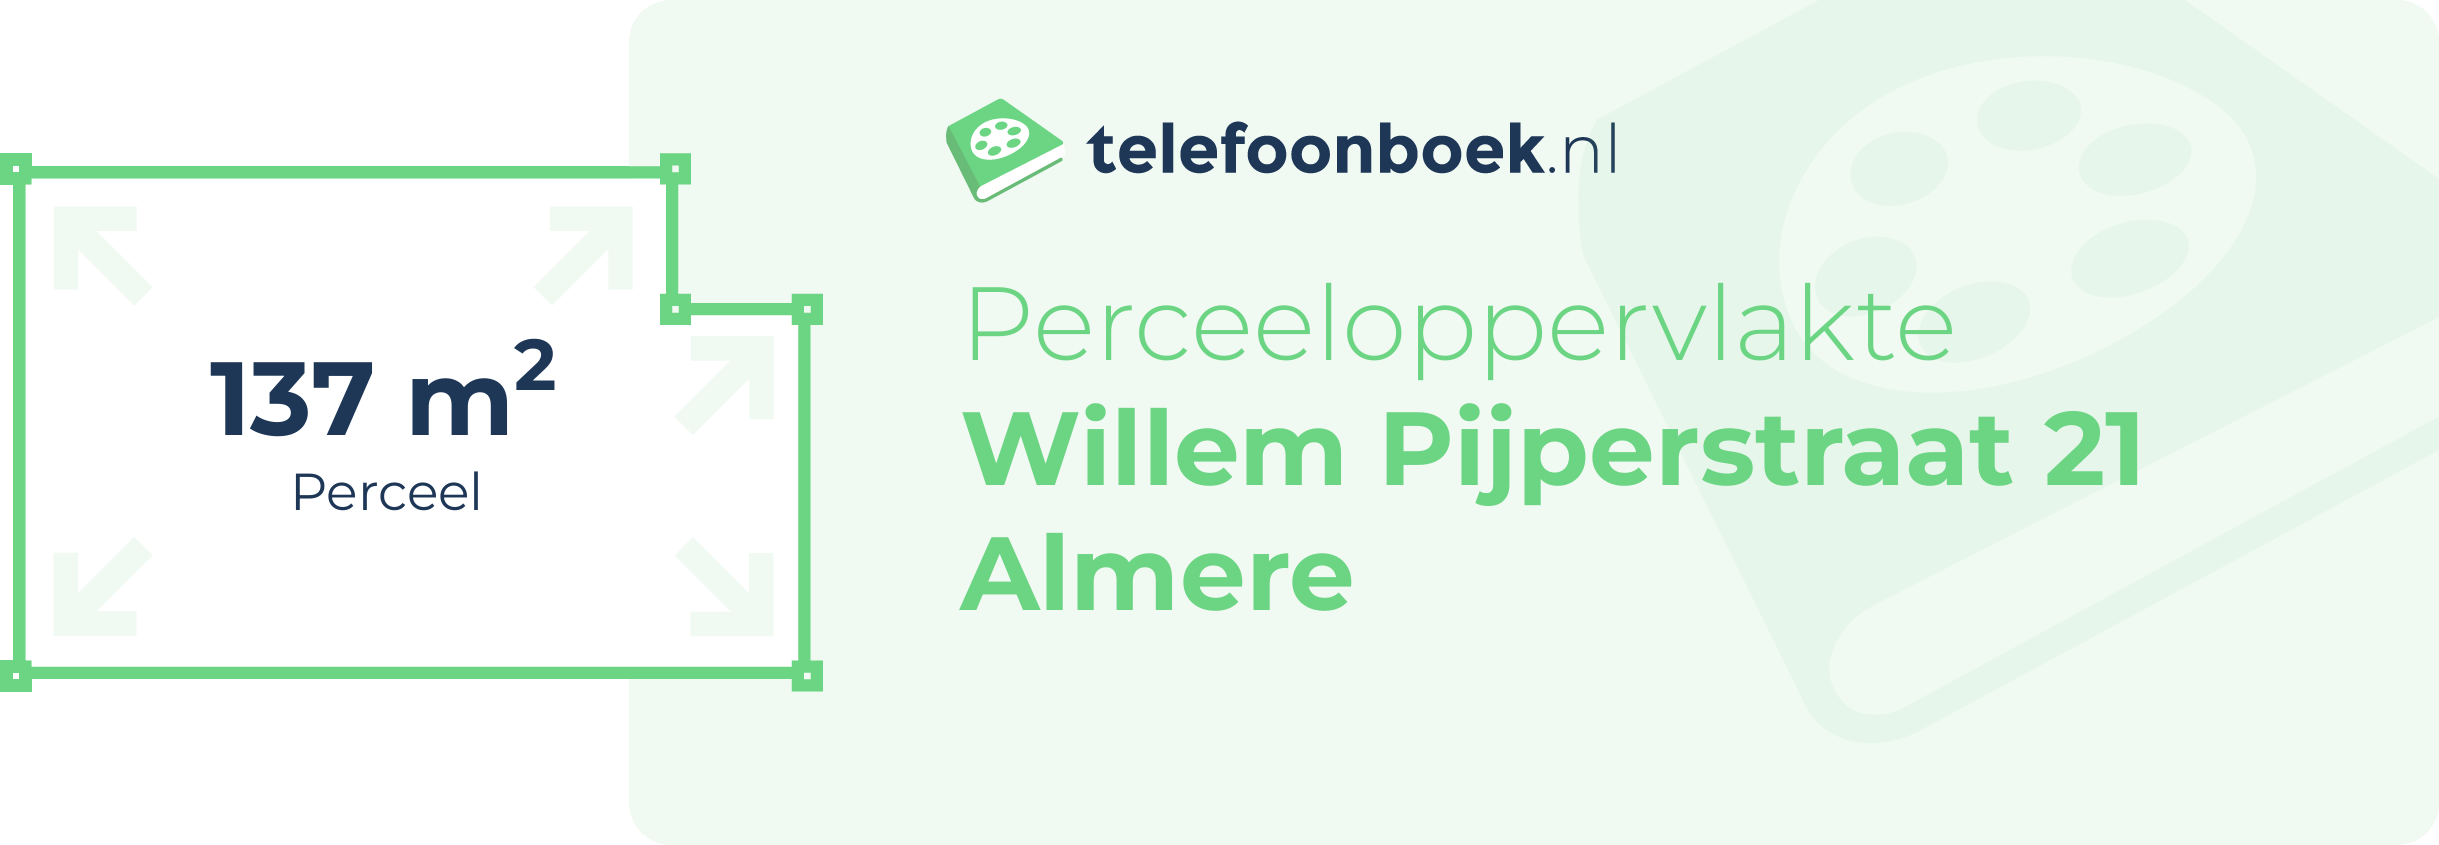 Perceeloppervlakte Willem Pijperstraat 21 Almere